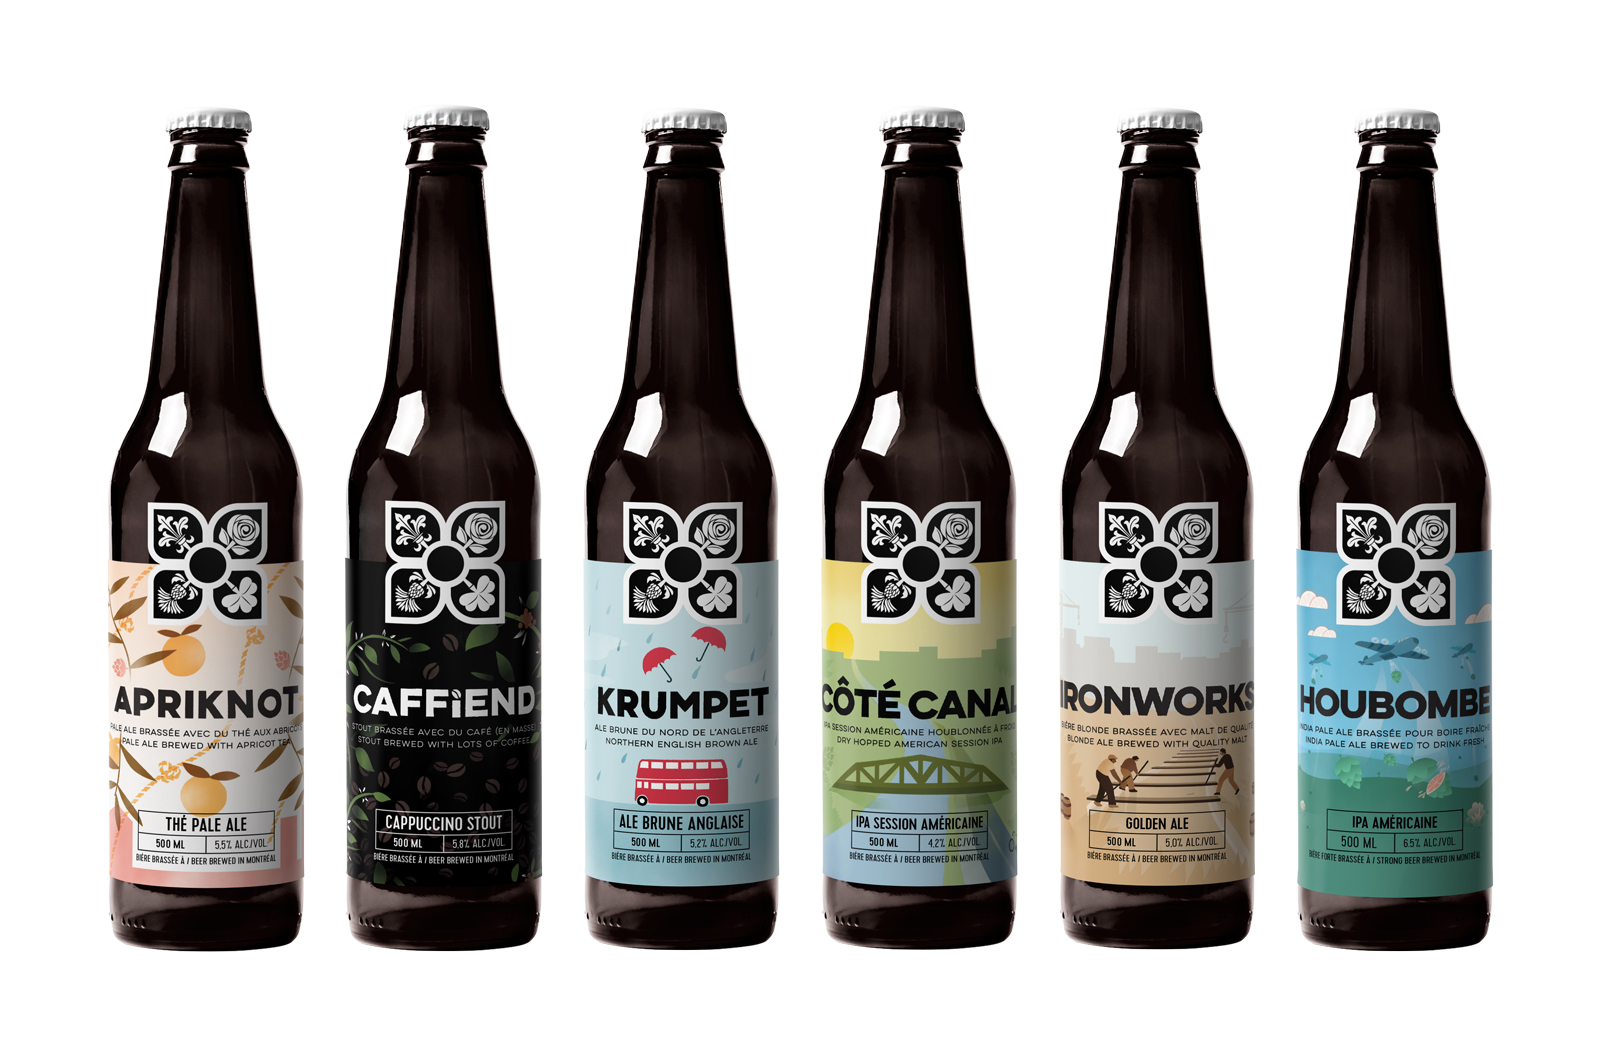 Microbrasserie 4 Origines Beer Label Design Montreal